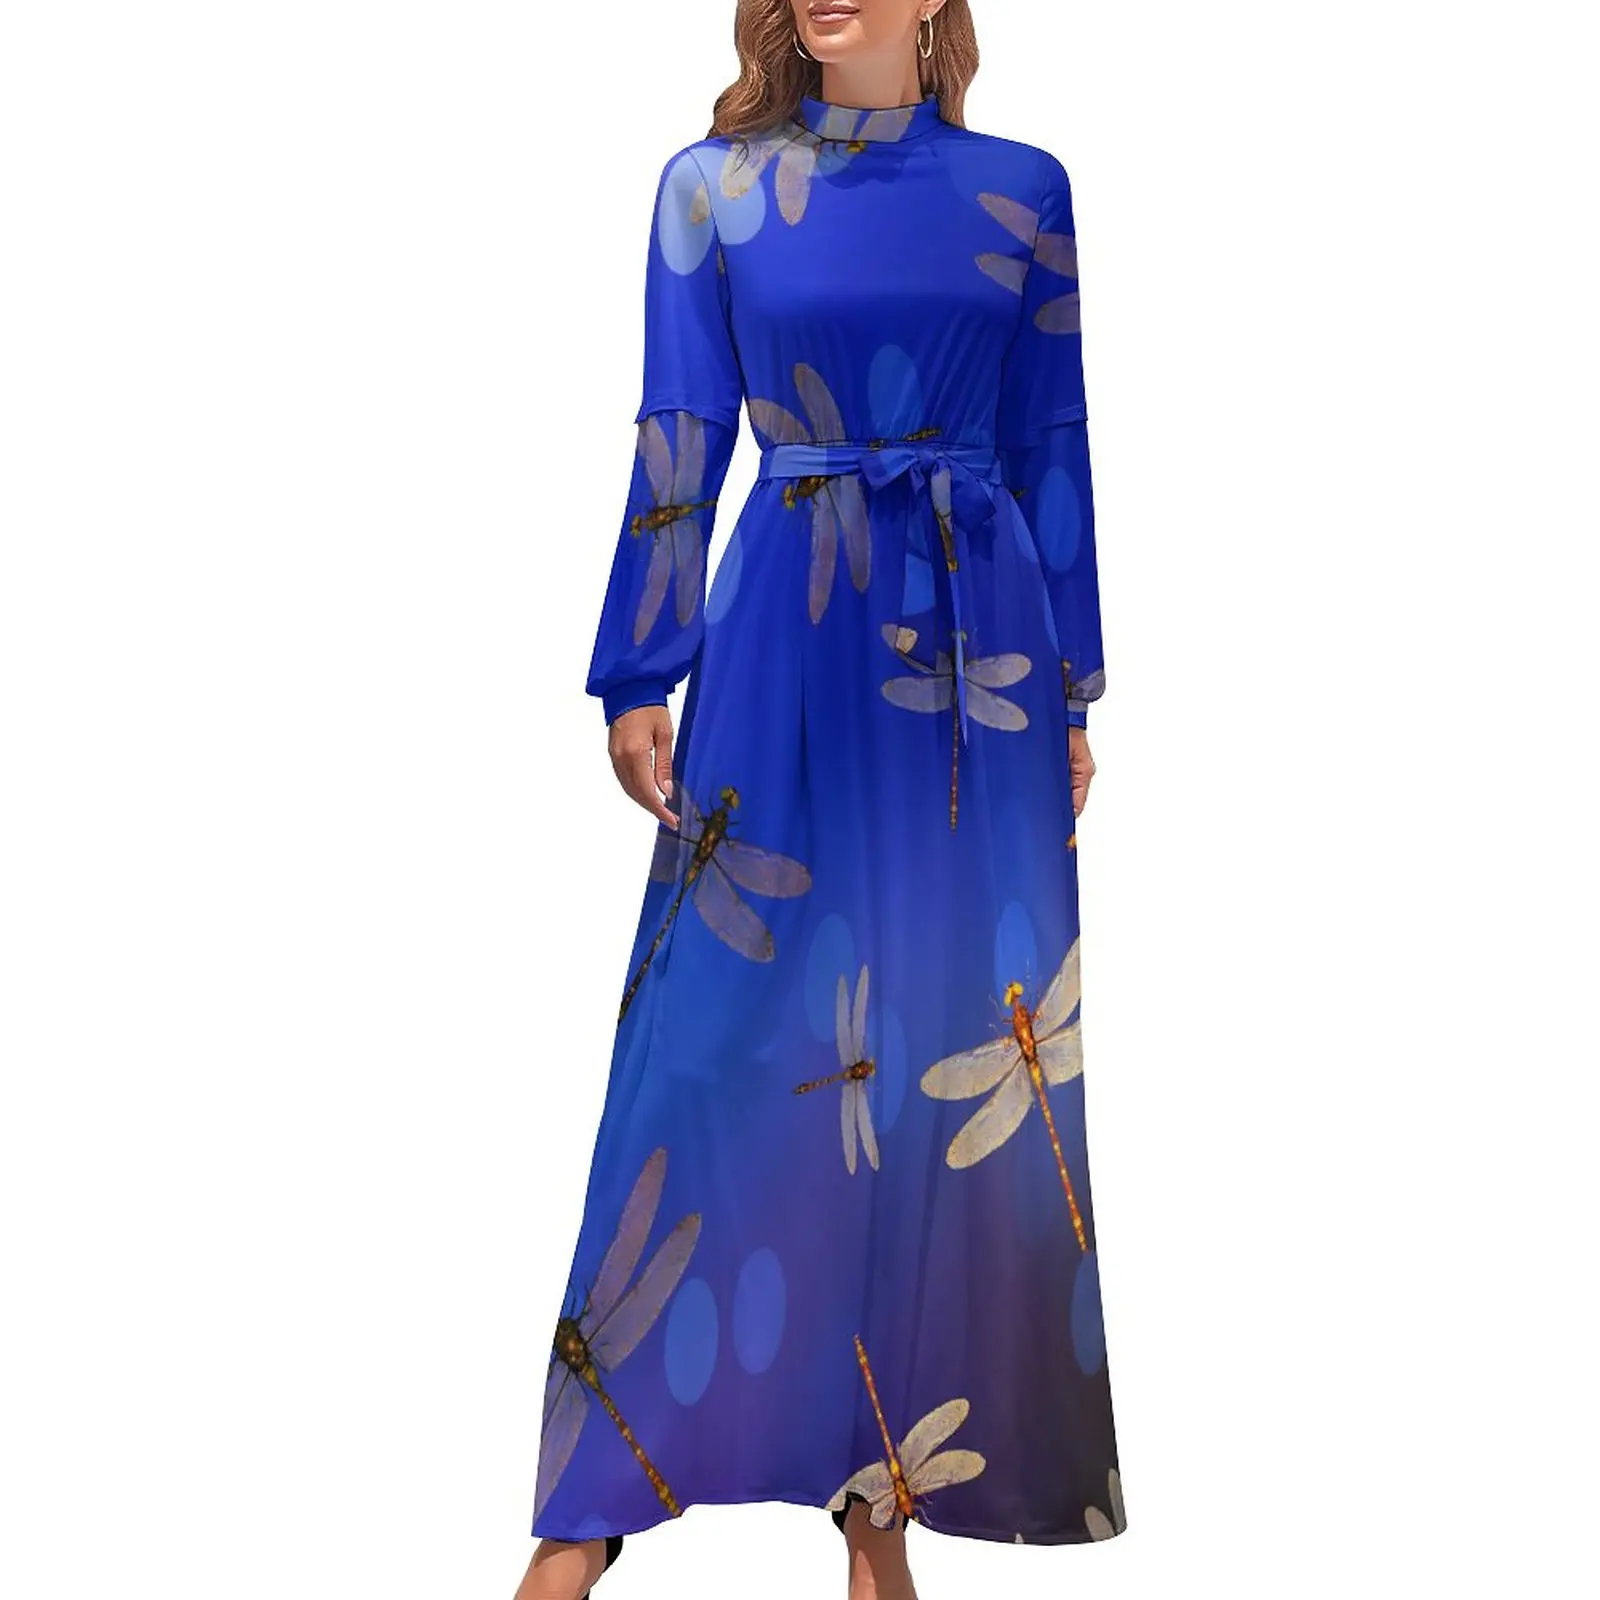 

Blue Dragonfly Dress Long Sleeve Gradient Print Elegant Maxi Dress High Waist Korean Fashion Graphic Bohemia Long Dresses Gift